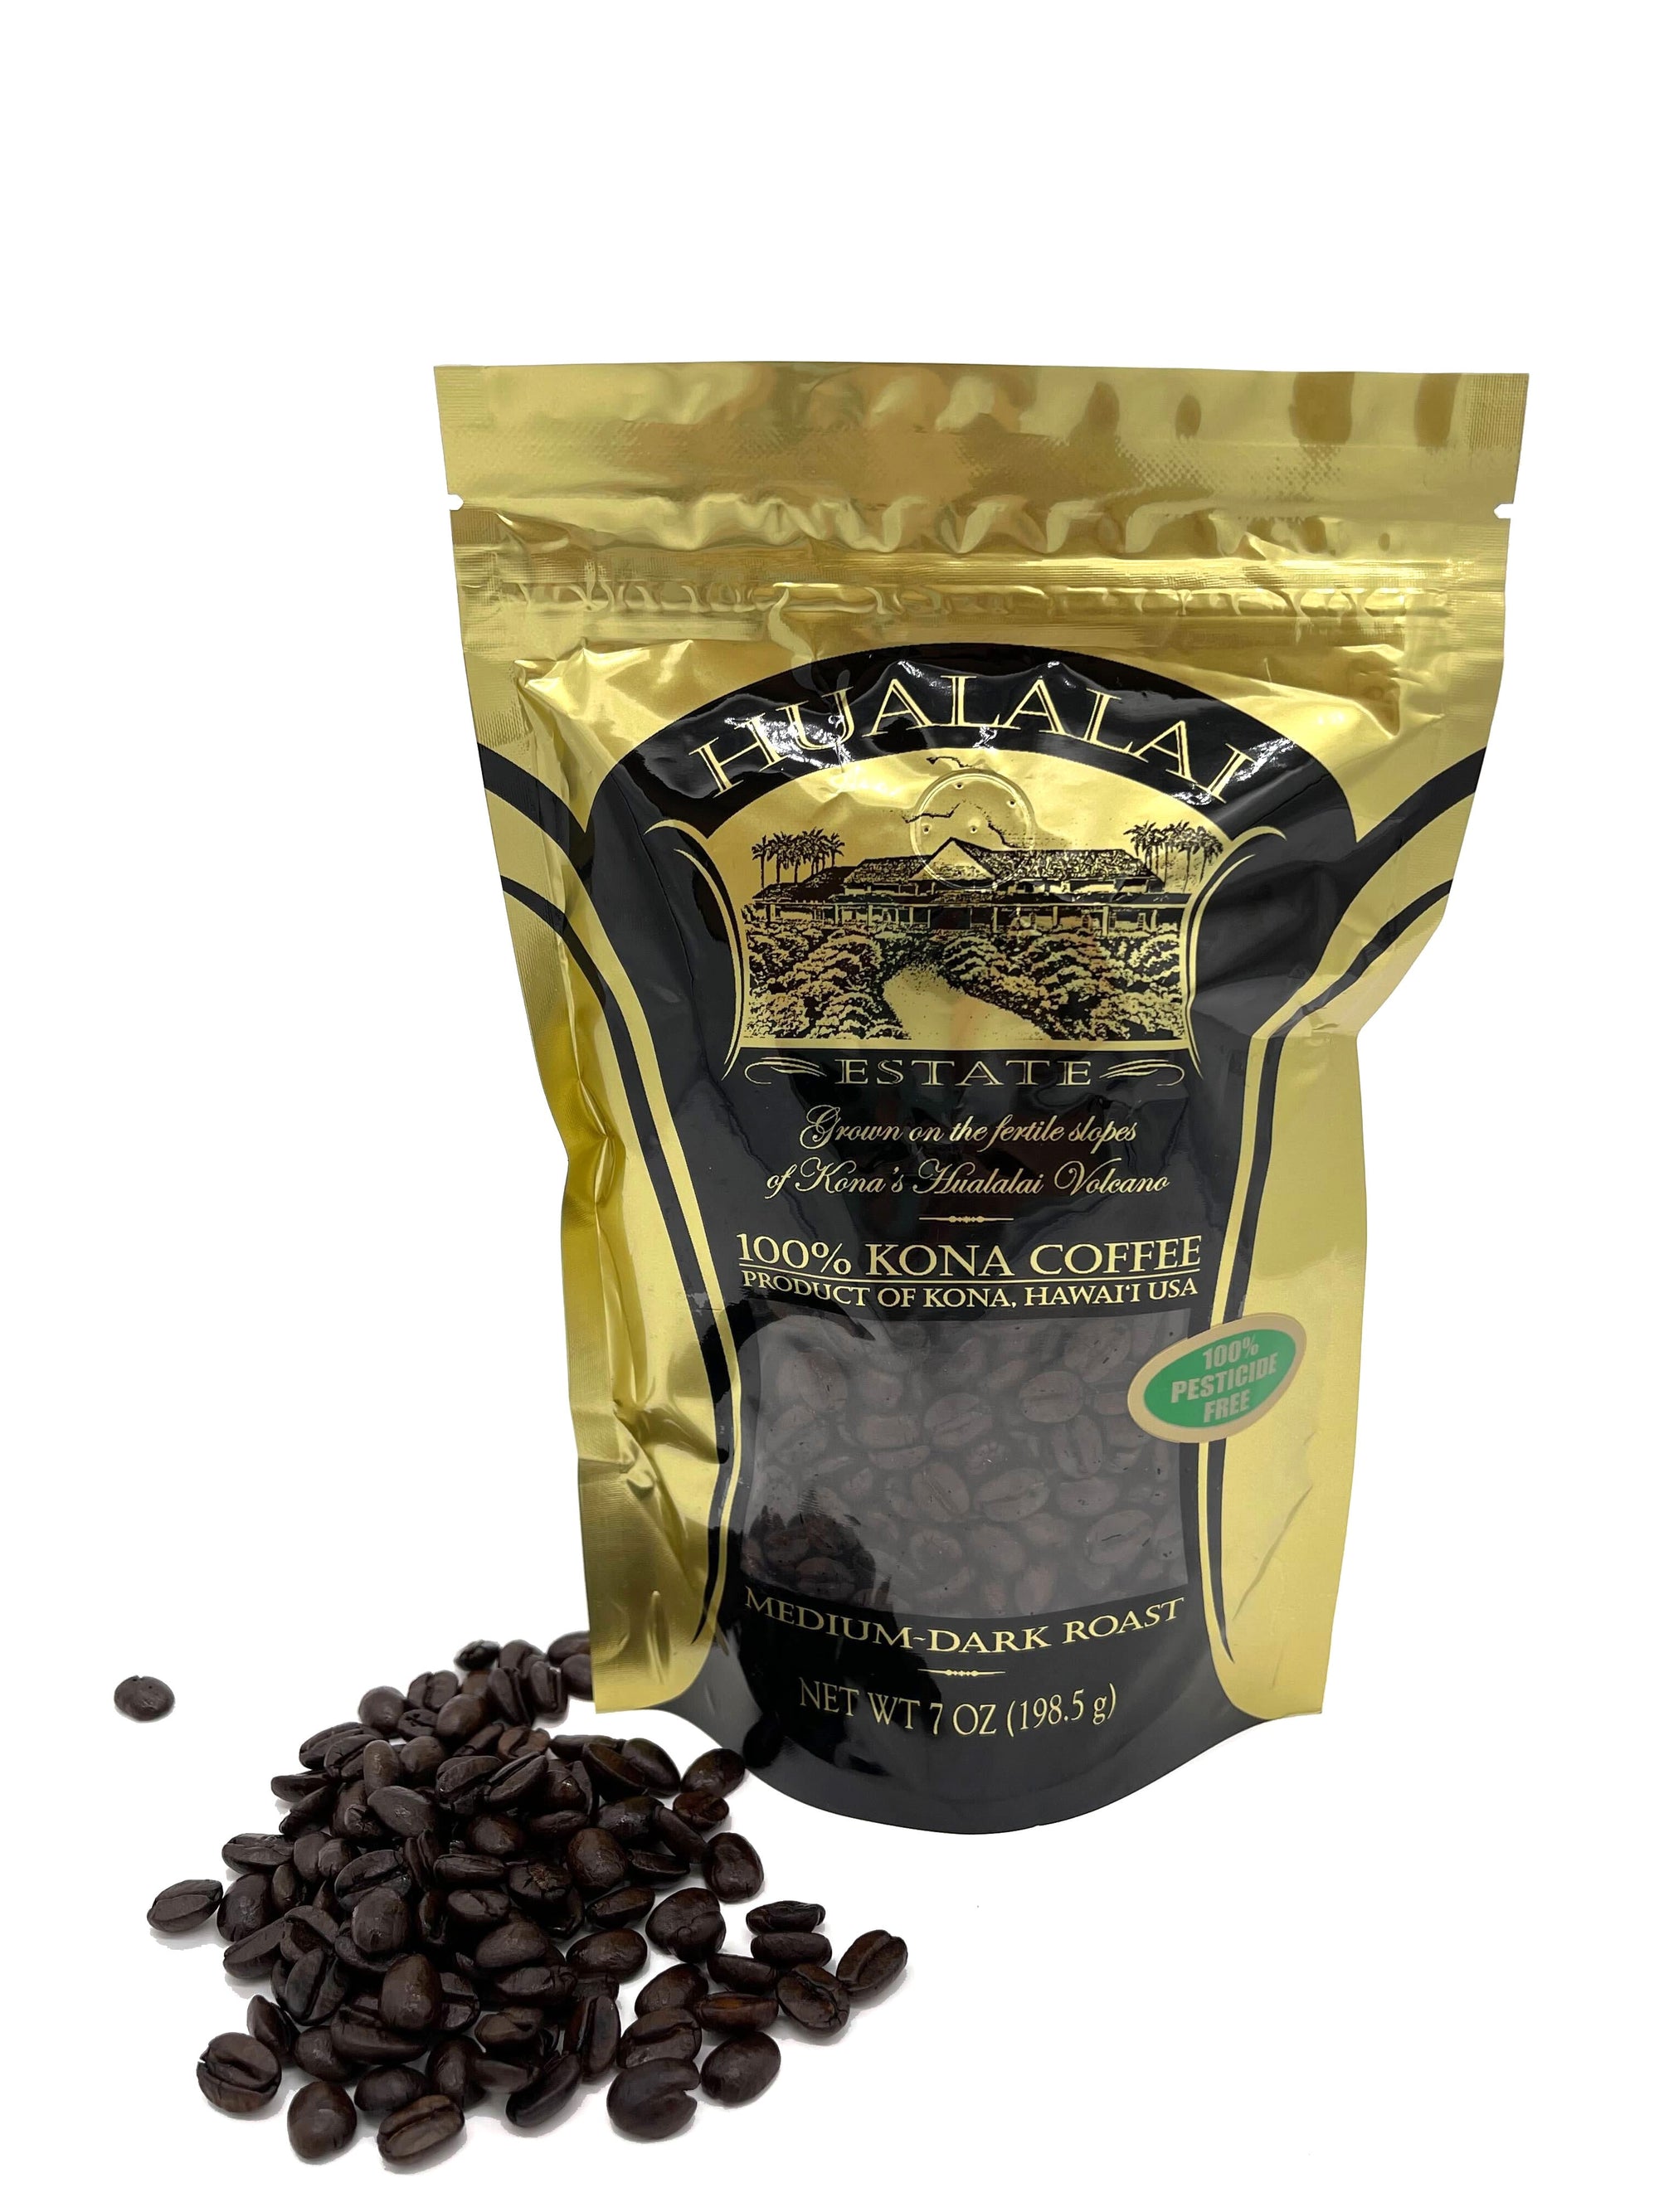 Pop-Up Mākeke - Hualalai Estate Coffee - Premium Estate Whole Bean Kona Coffee